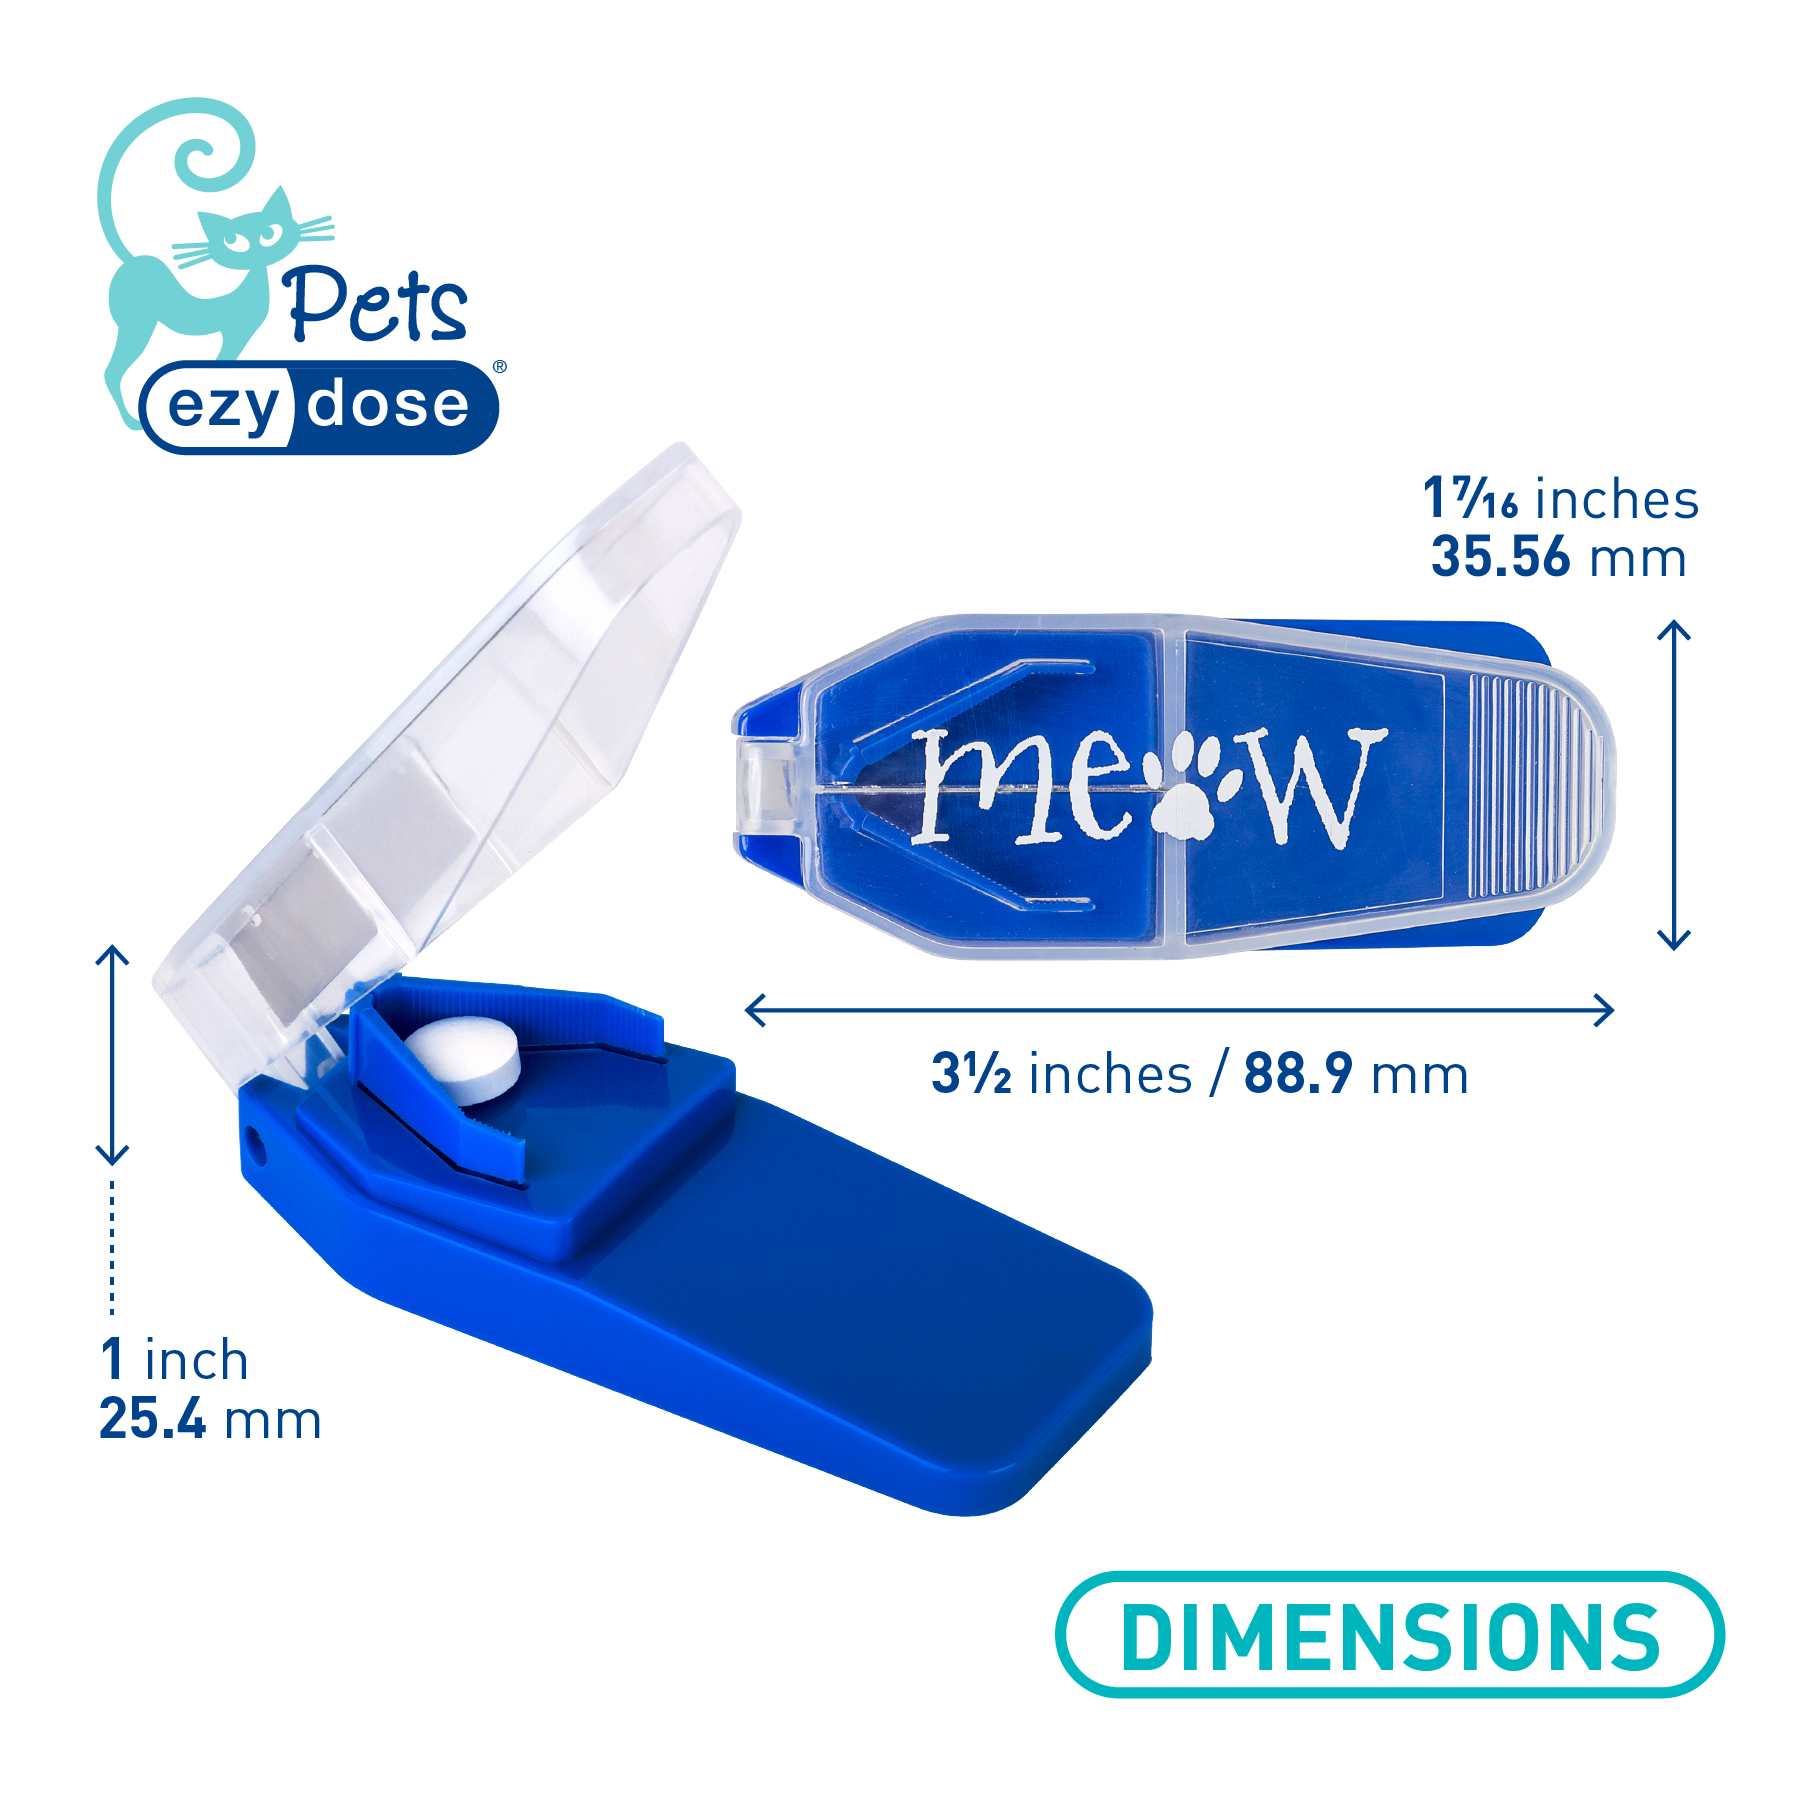 Pill cutter dimensions